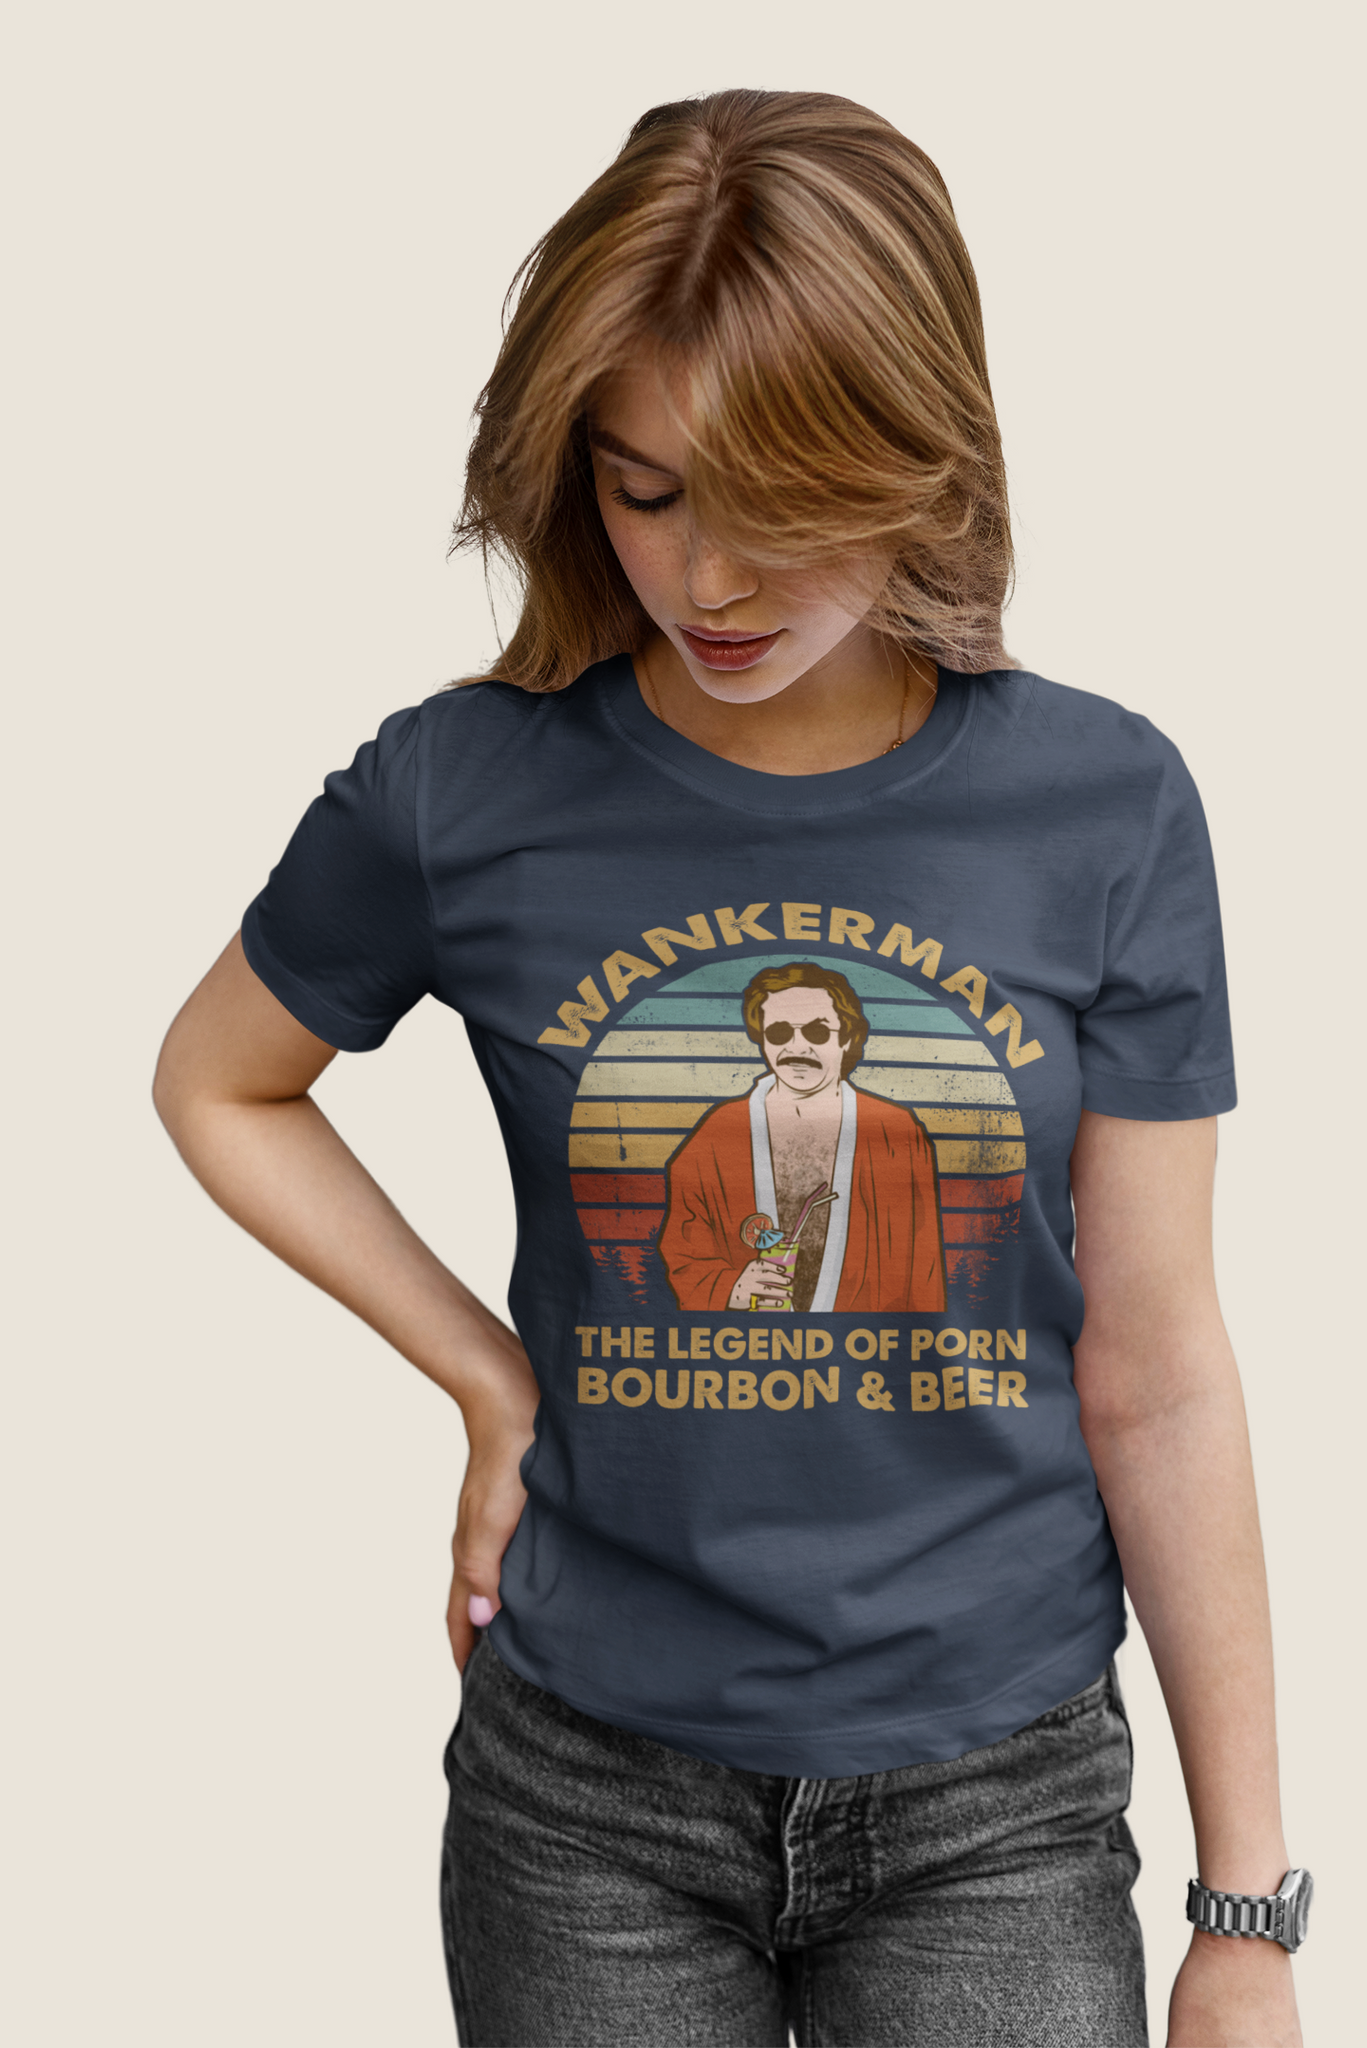 Anchorman Vintage T Shirt, Ron Burgundy T Shirt, Wankerman The Legend Of Porn Tshirt